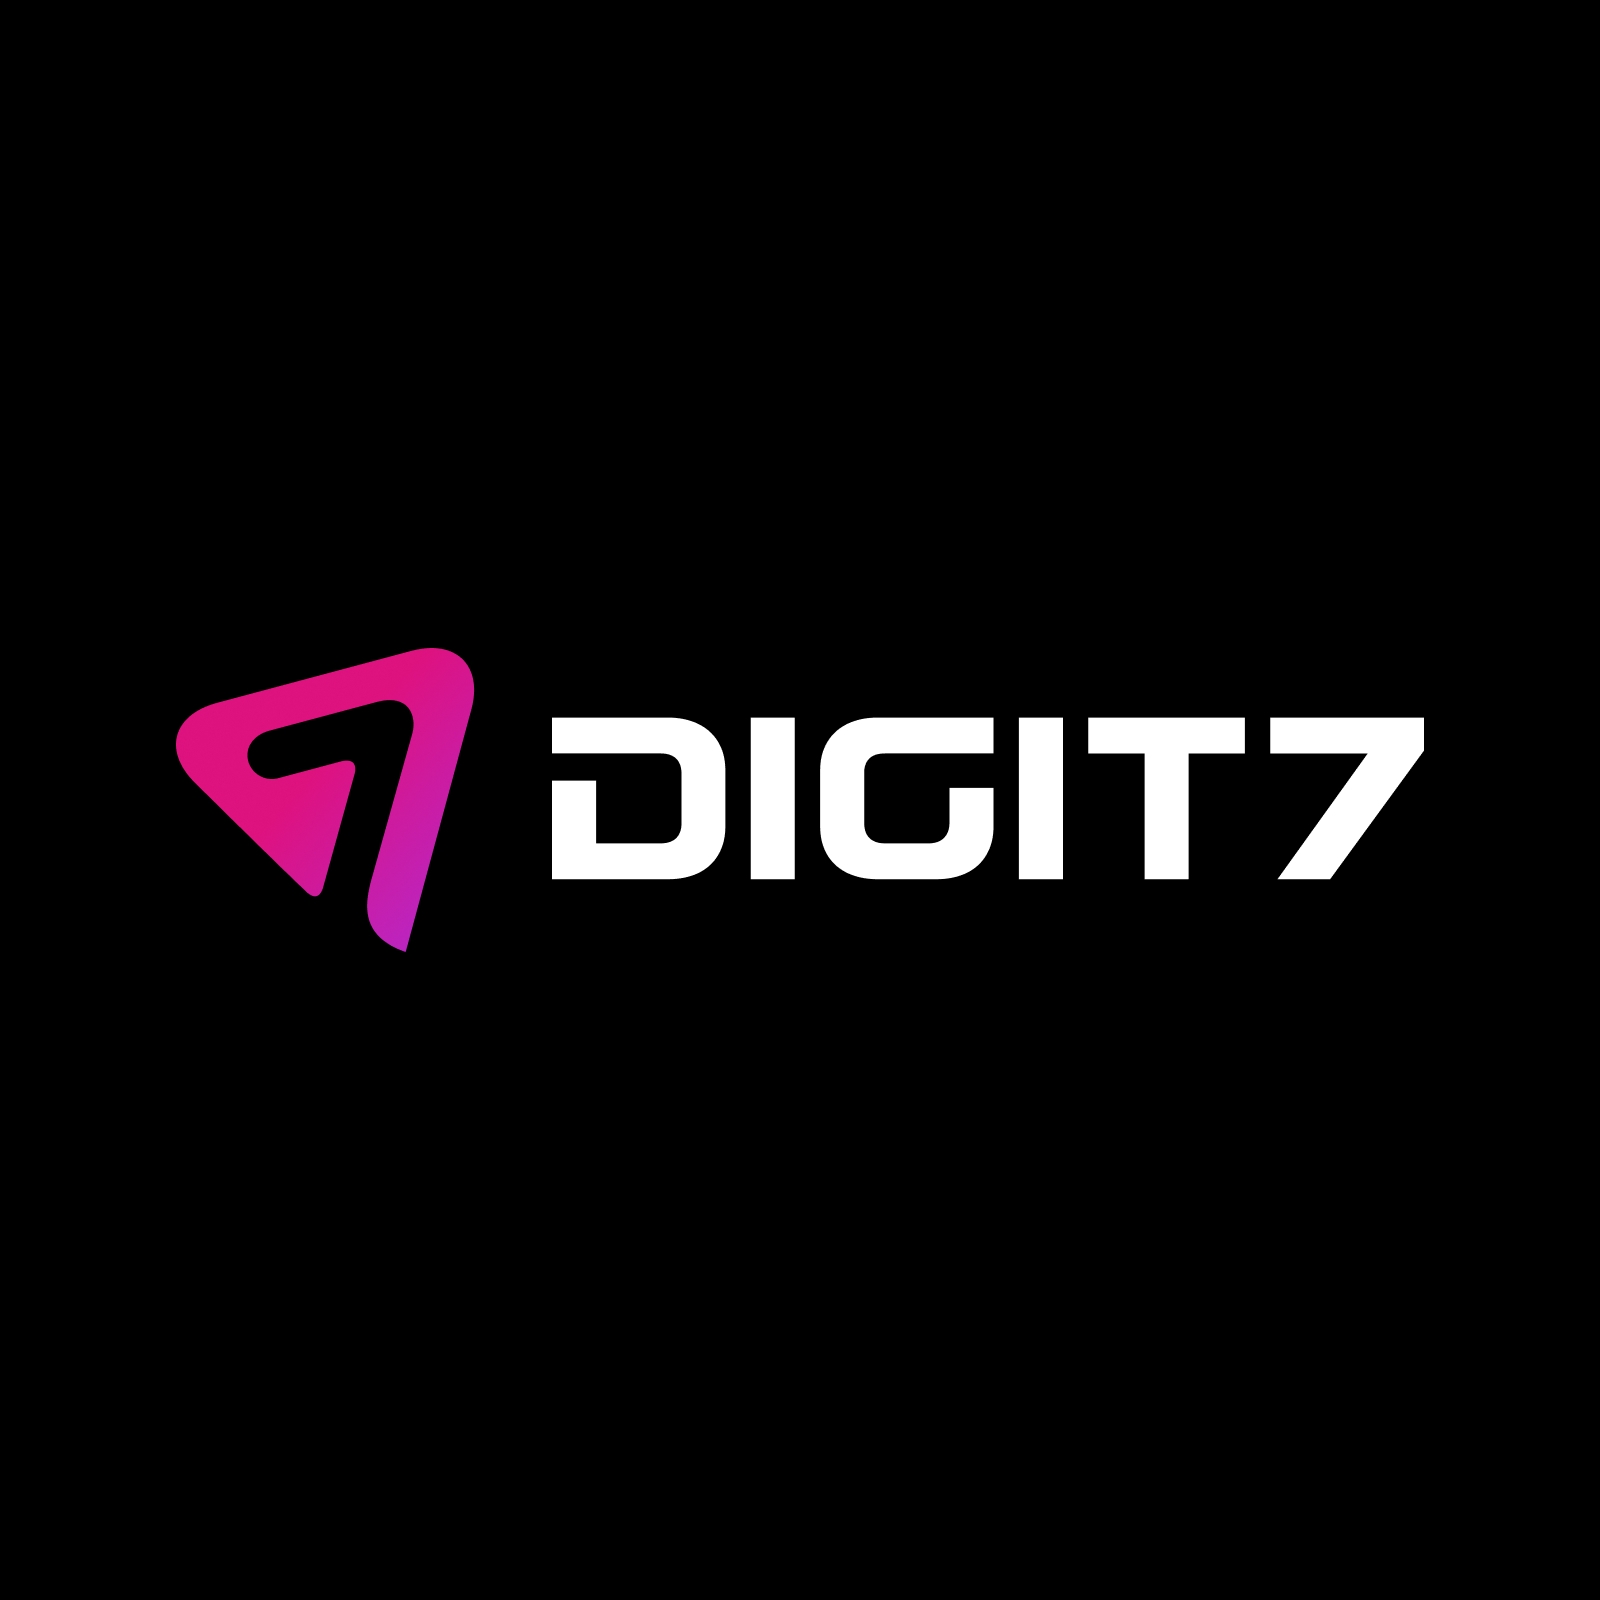 Digit7 is navigating retail tech's digital future